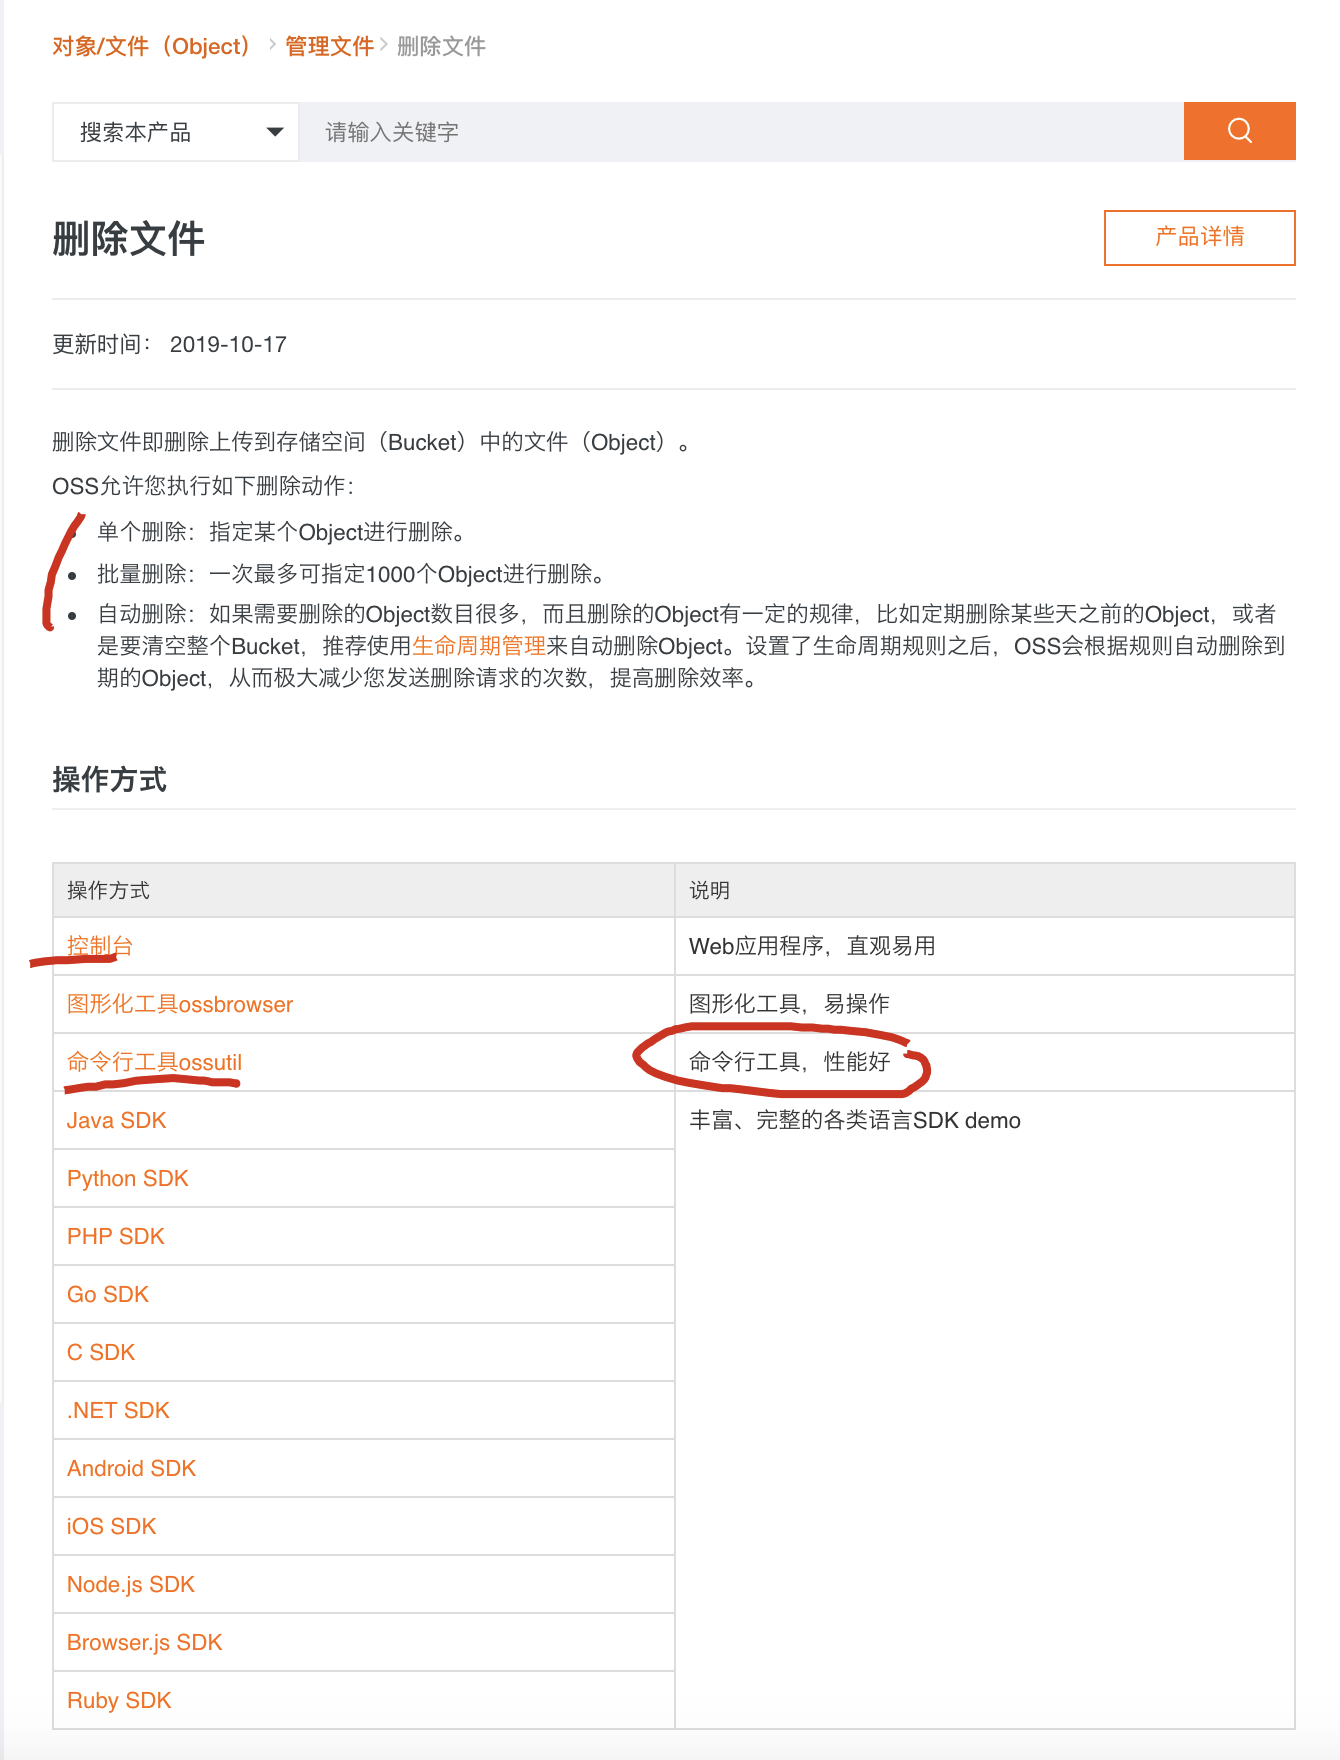 Alibaba Cloud CDN &amp; OSS delete files tutorials All In One